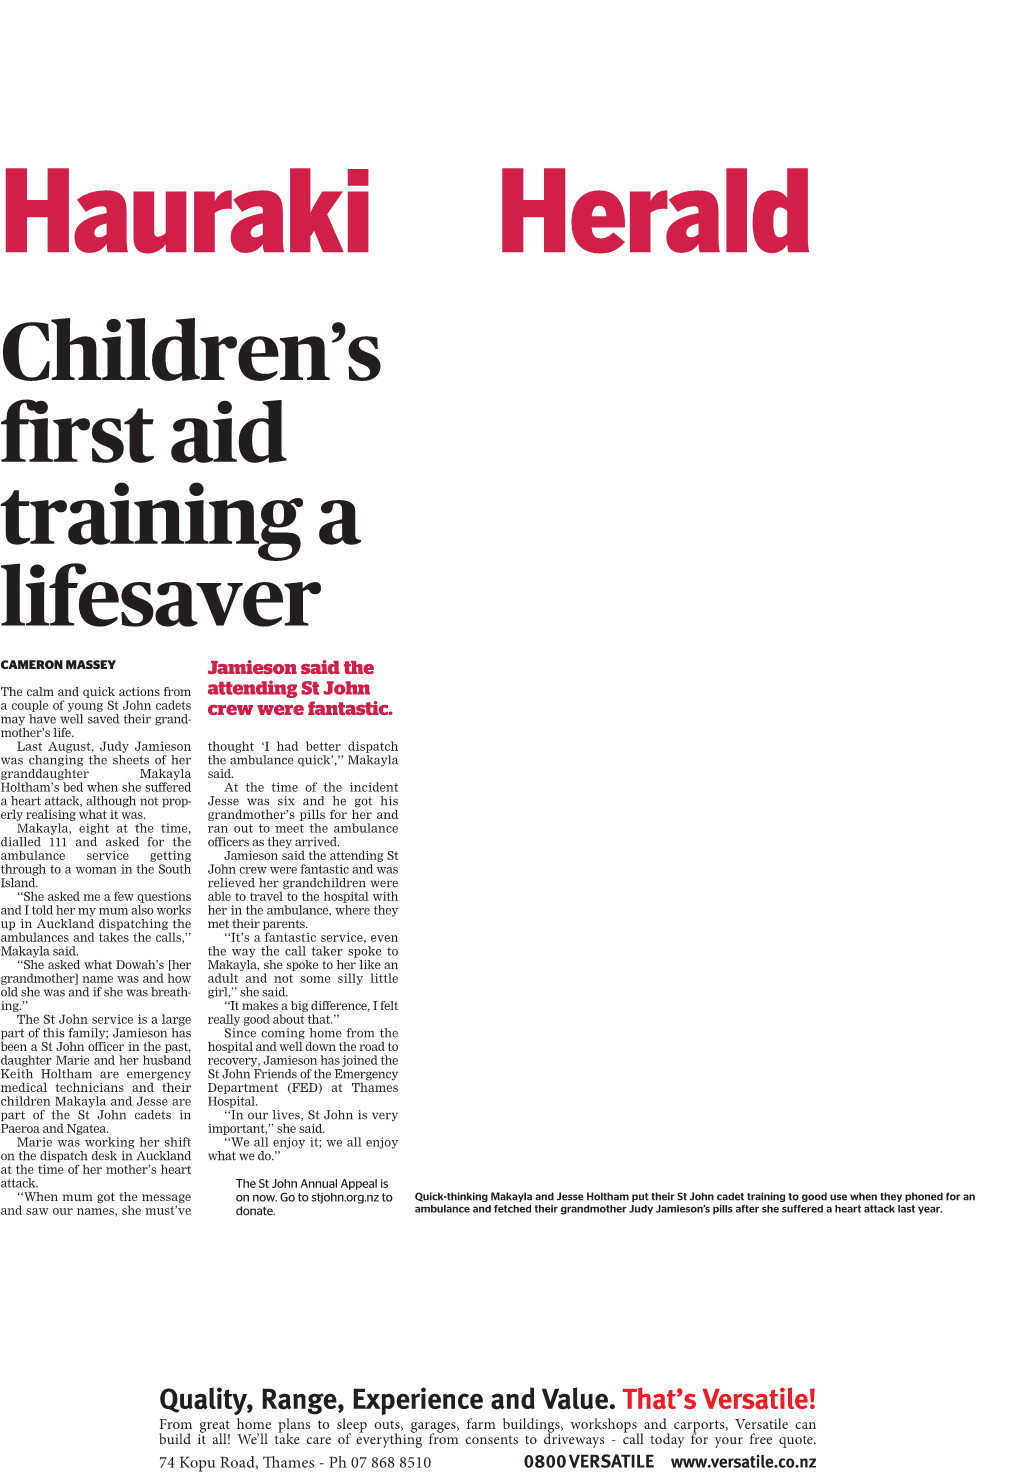 Children's First Aid Training a Lifesaver